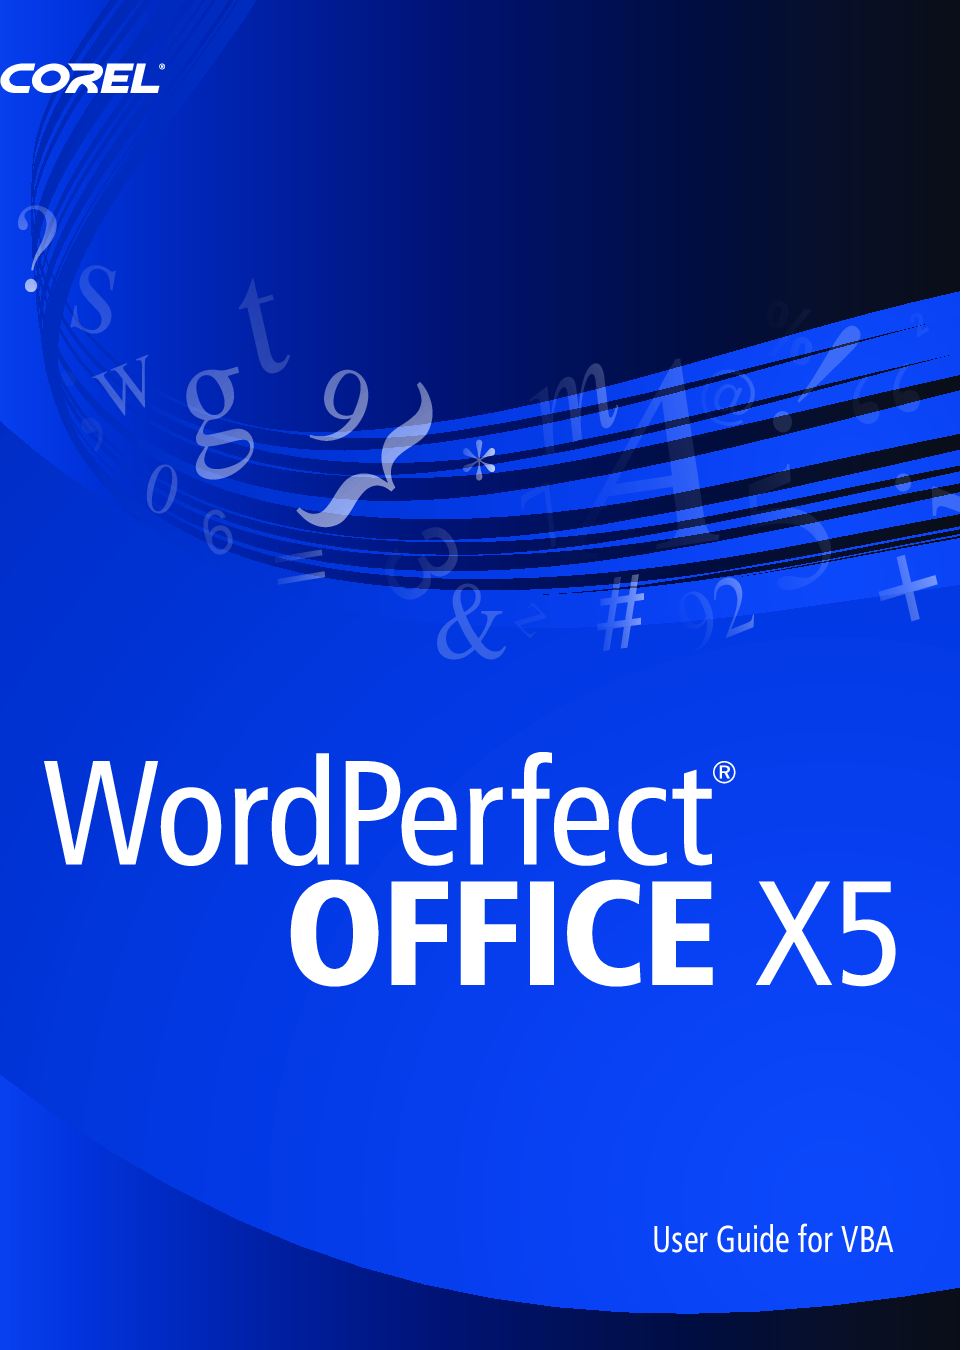 Corel Corel® WordPerfect® Office X5 User Guide For VBA Word Perfect UG